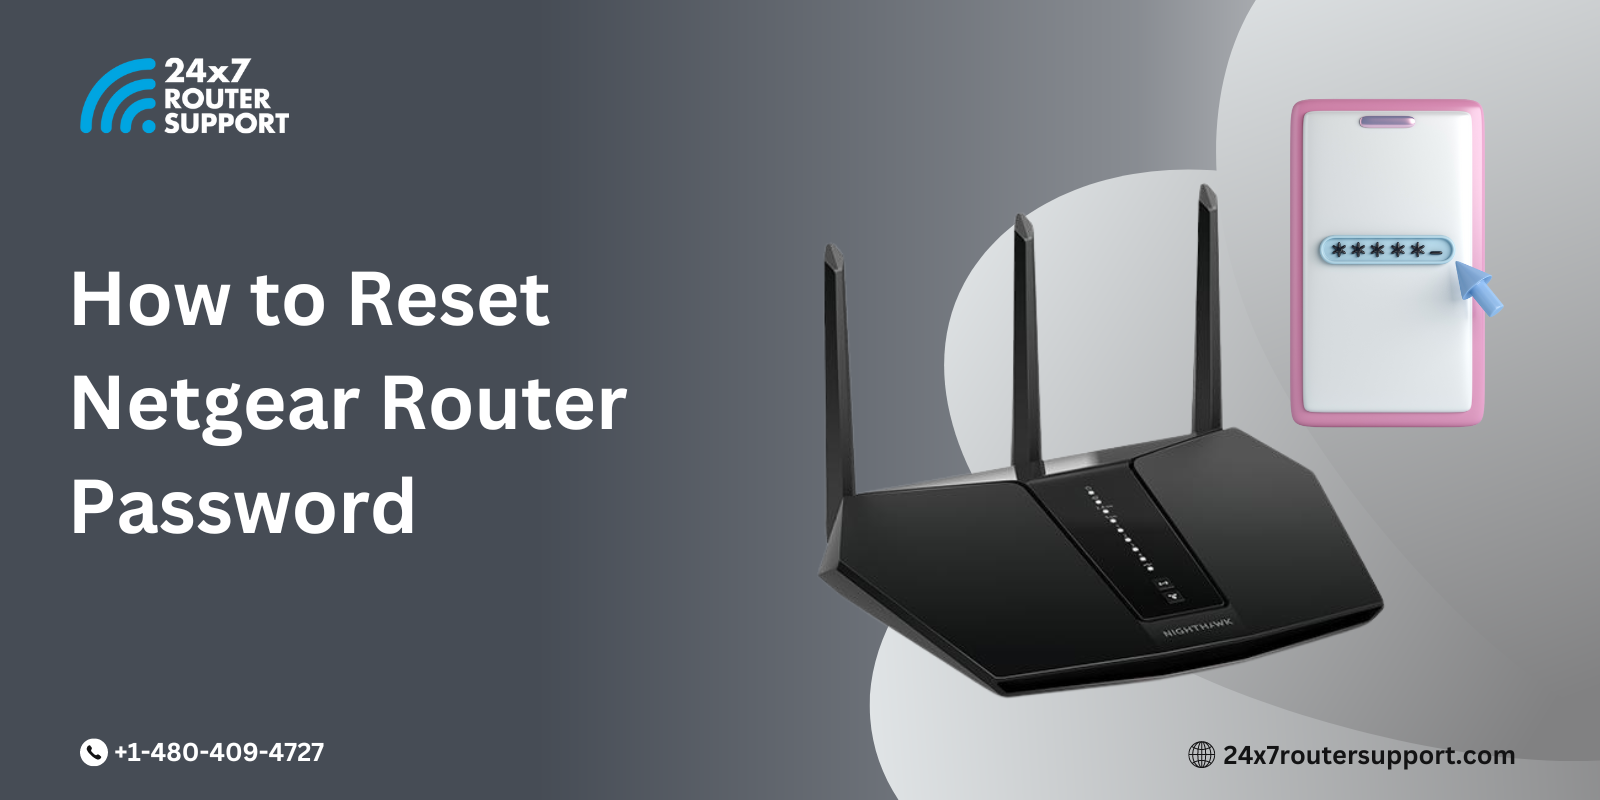 How to Reset Netgear Router Password